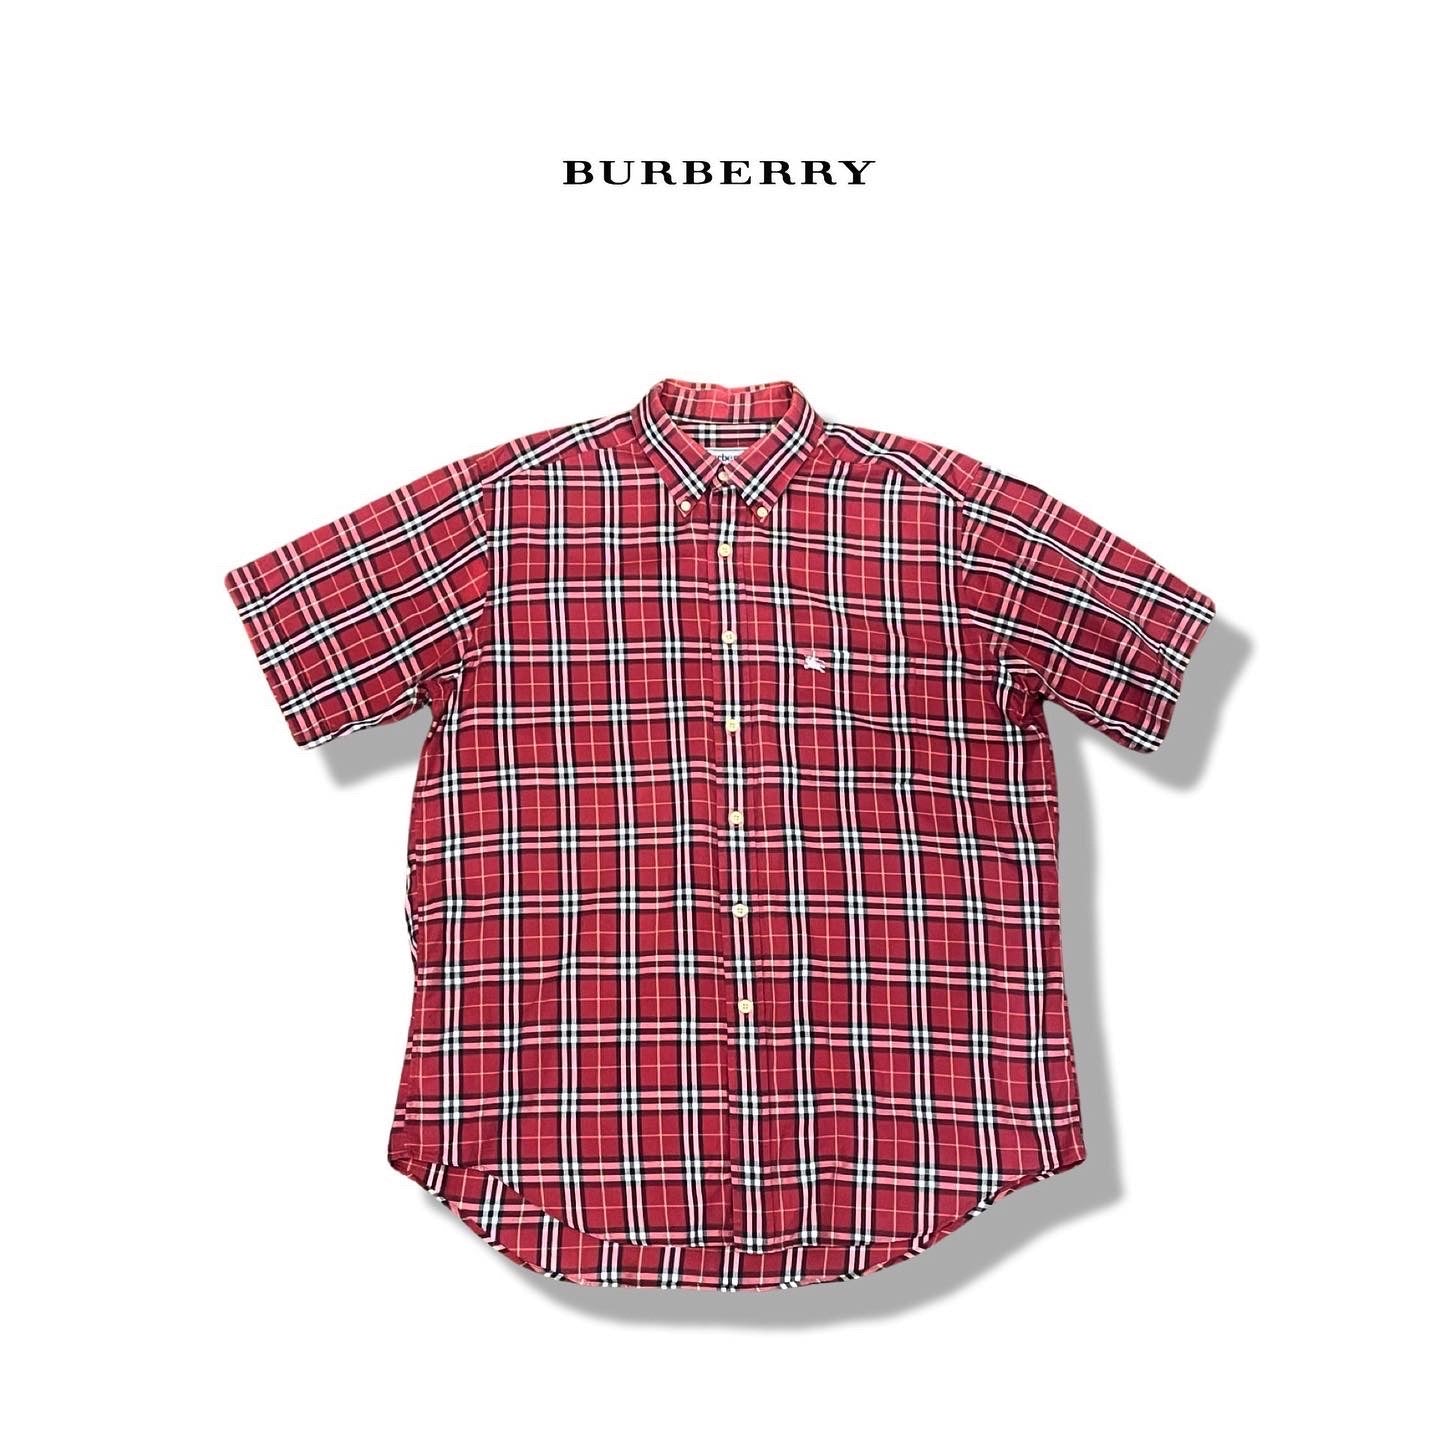 Burberrys shirts